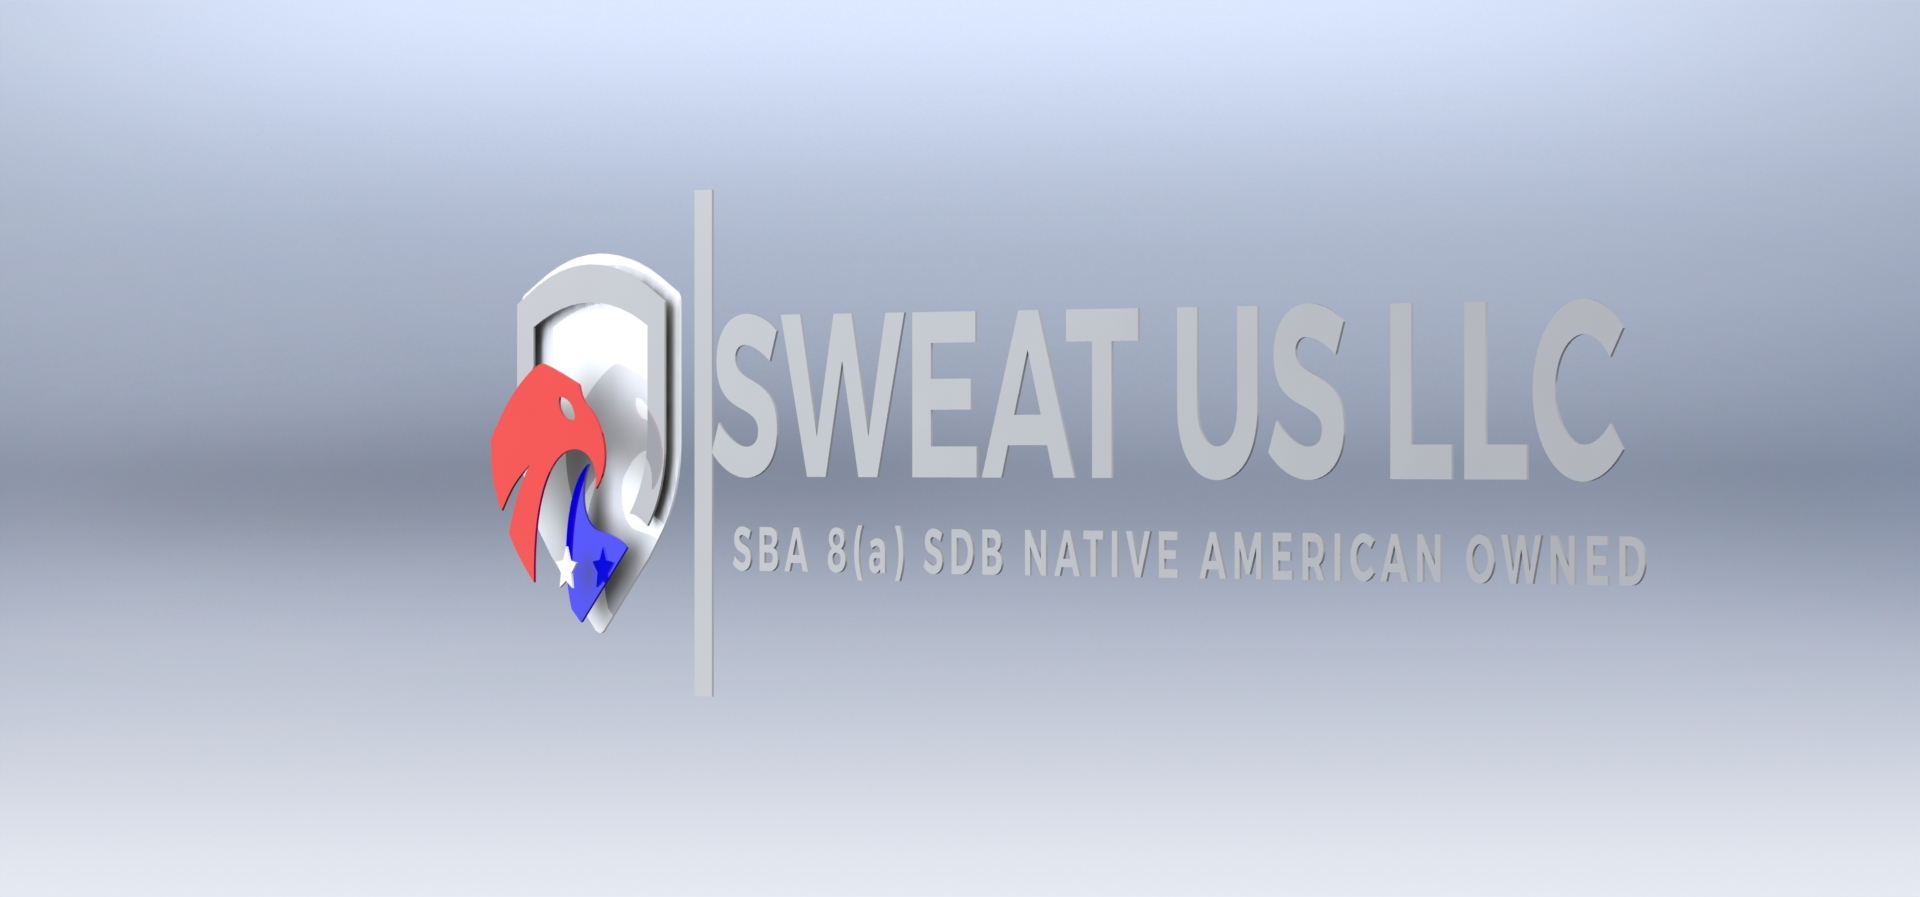 p2 - right - Sweat US LLC.JPG